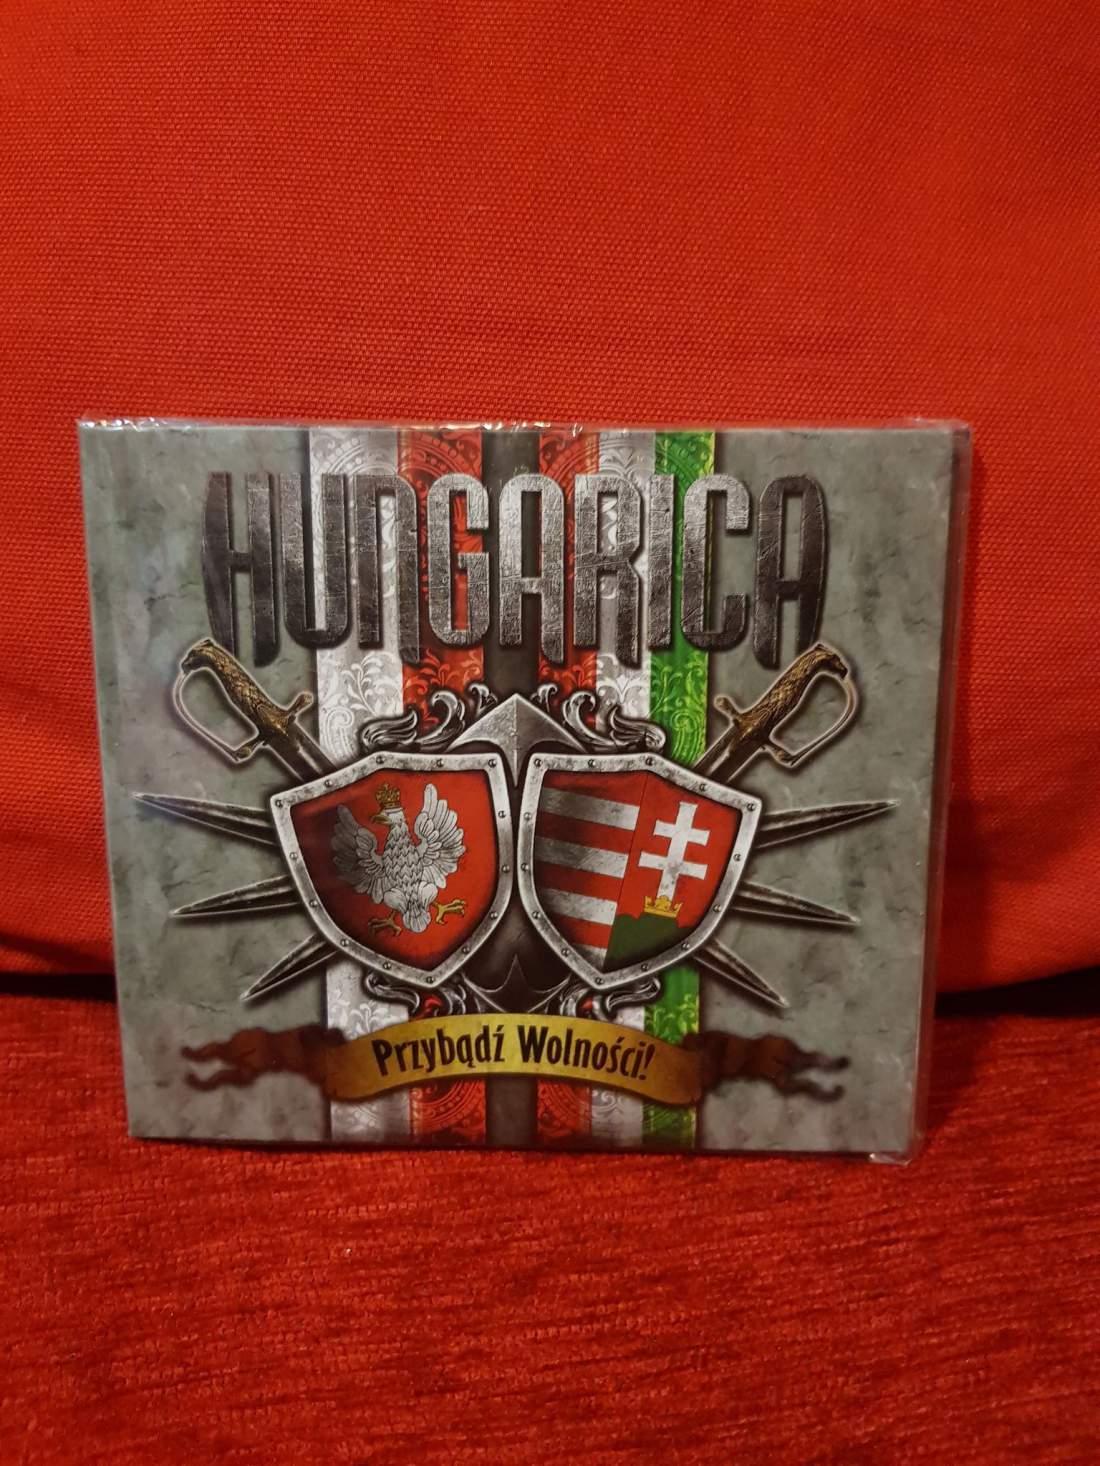 HUNGARICA - PRZYBADZ WOLNOSCI! CD